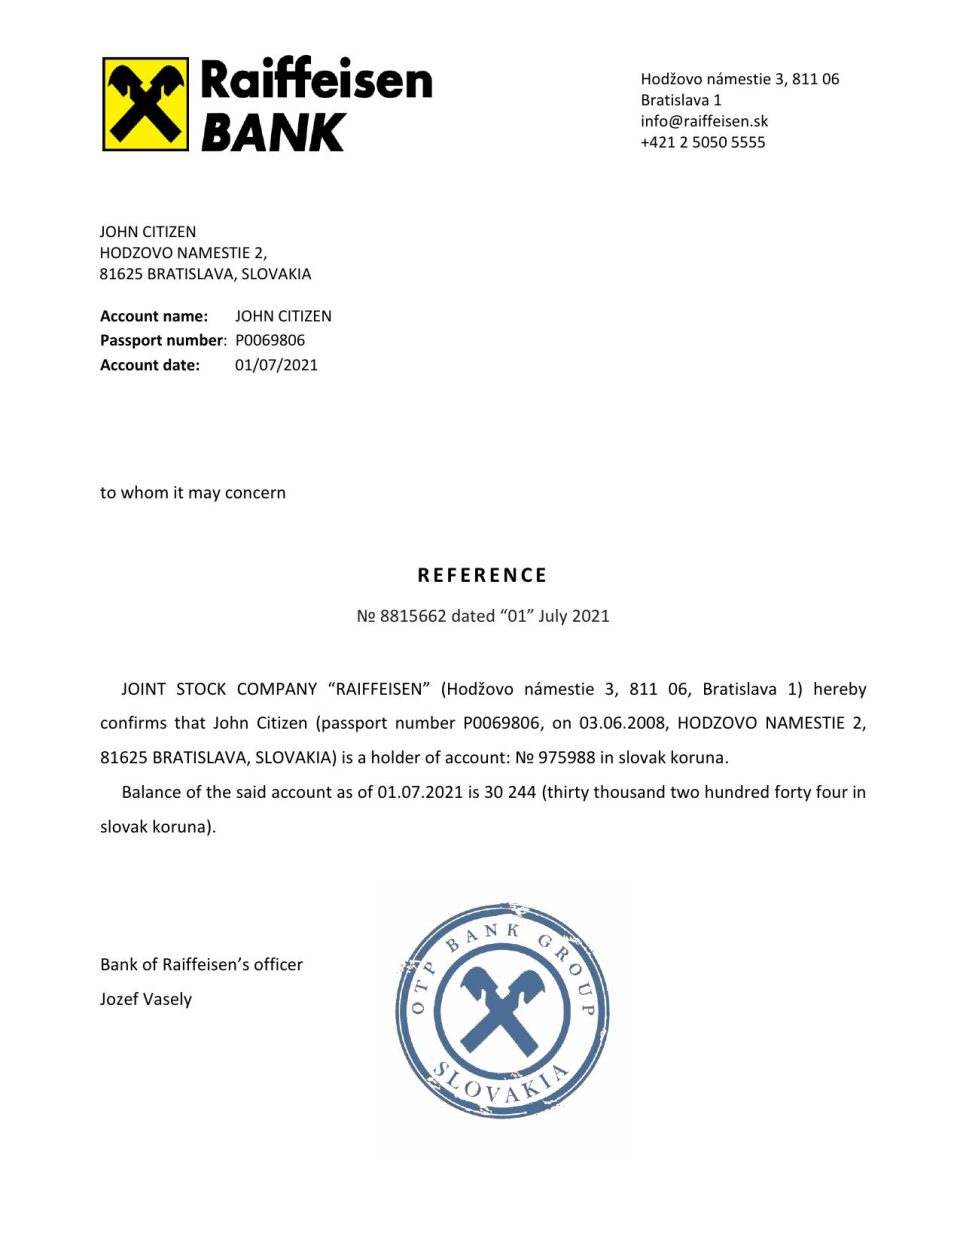 Download Slovakia Raiffeisen Bank Reference Letter Templates | Editable Word